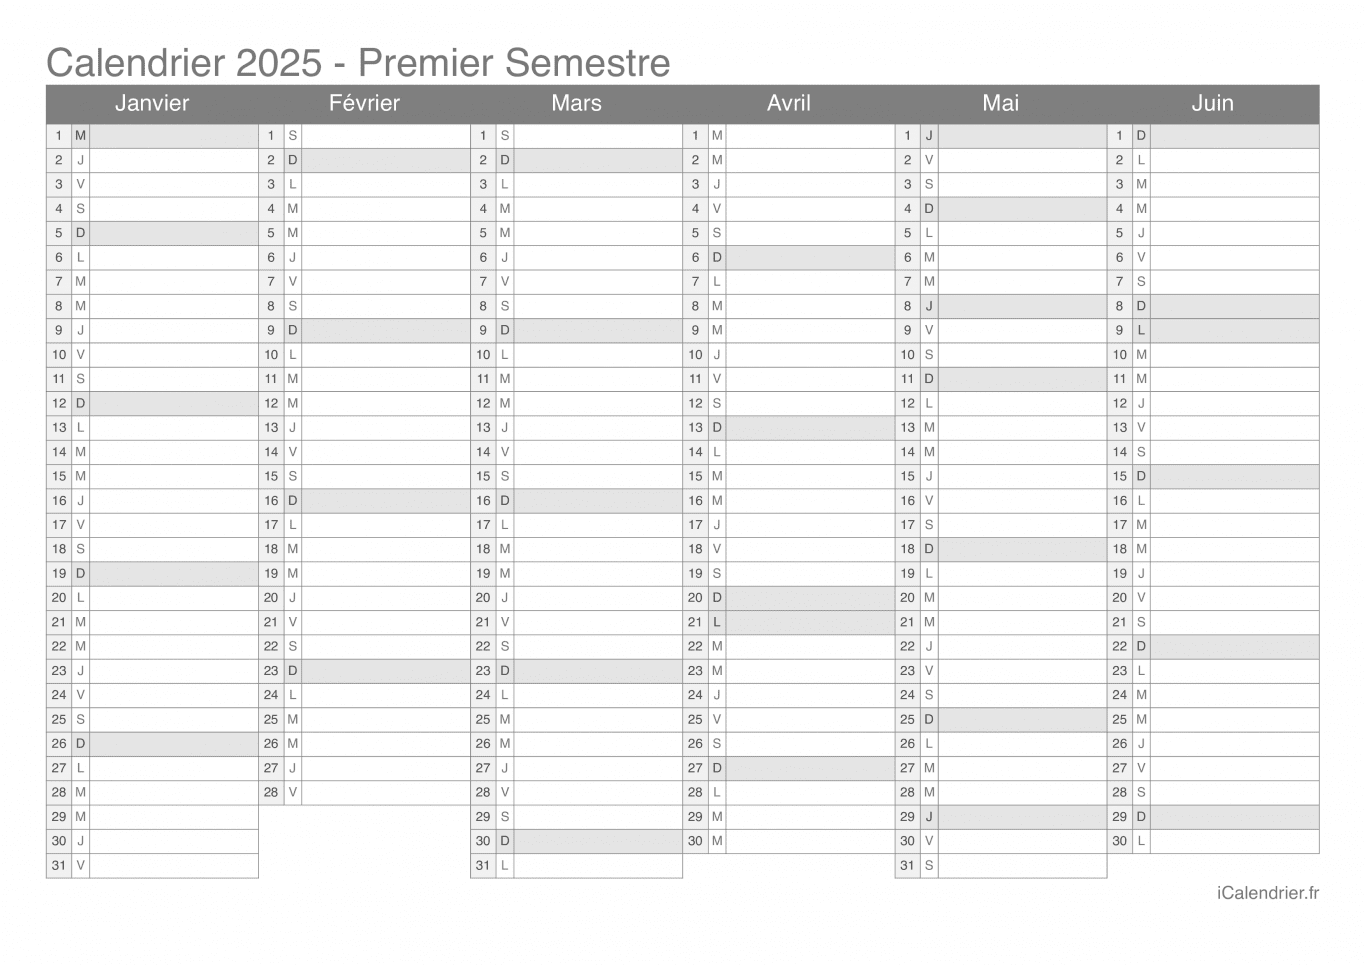 Calendrier par semestre 2025